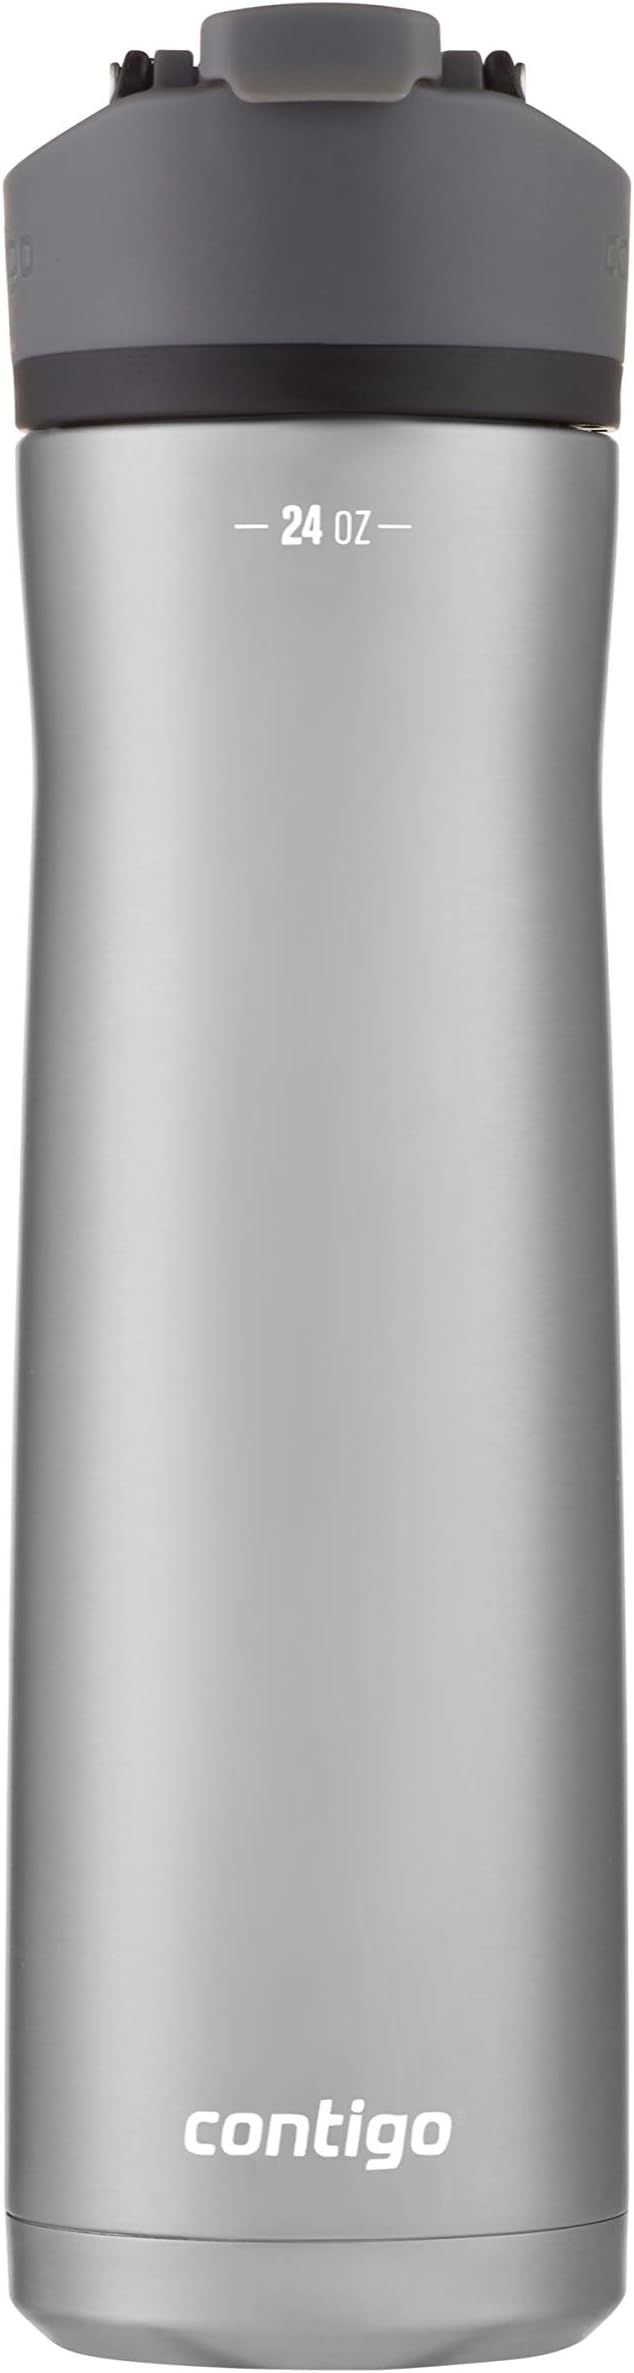 Contigo AUTOSEAL Water Bottle, 24oz, Licorice Lid | Amazon (US)